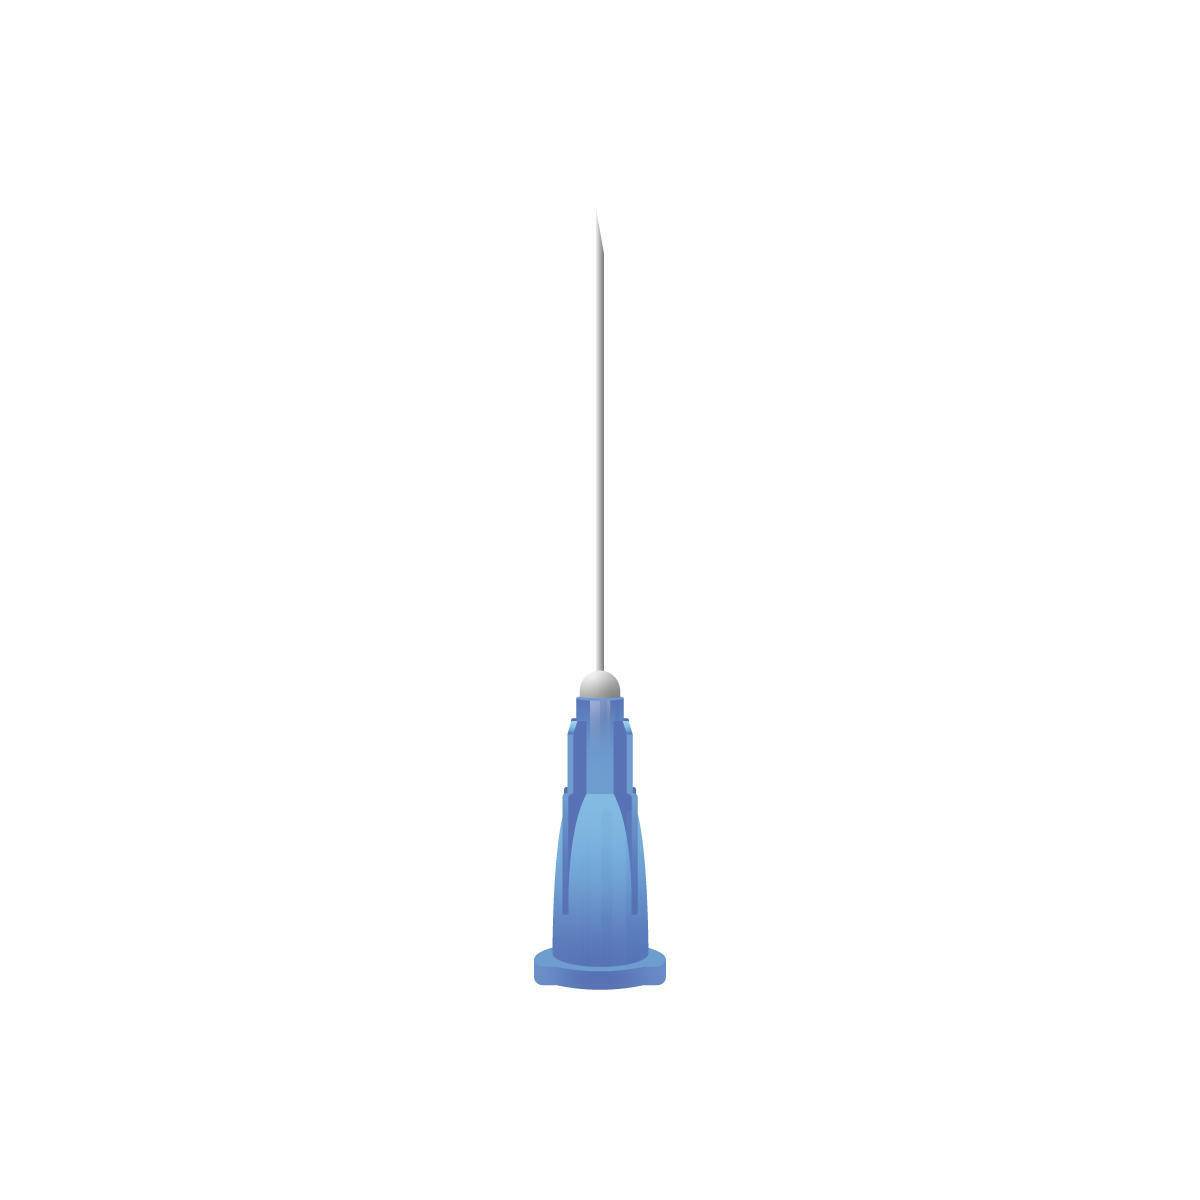 23g Blue 1.25 inch Unisharp Needles - UKMEDI